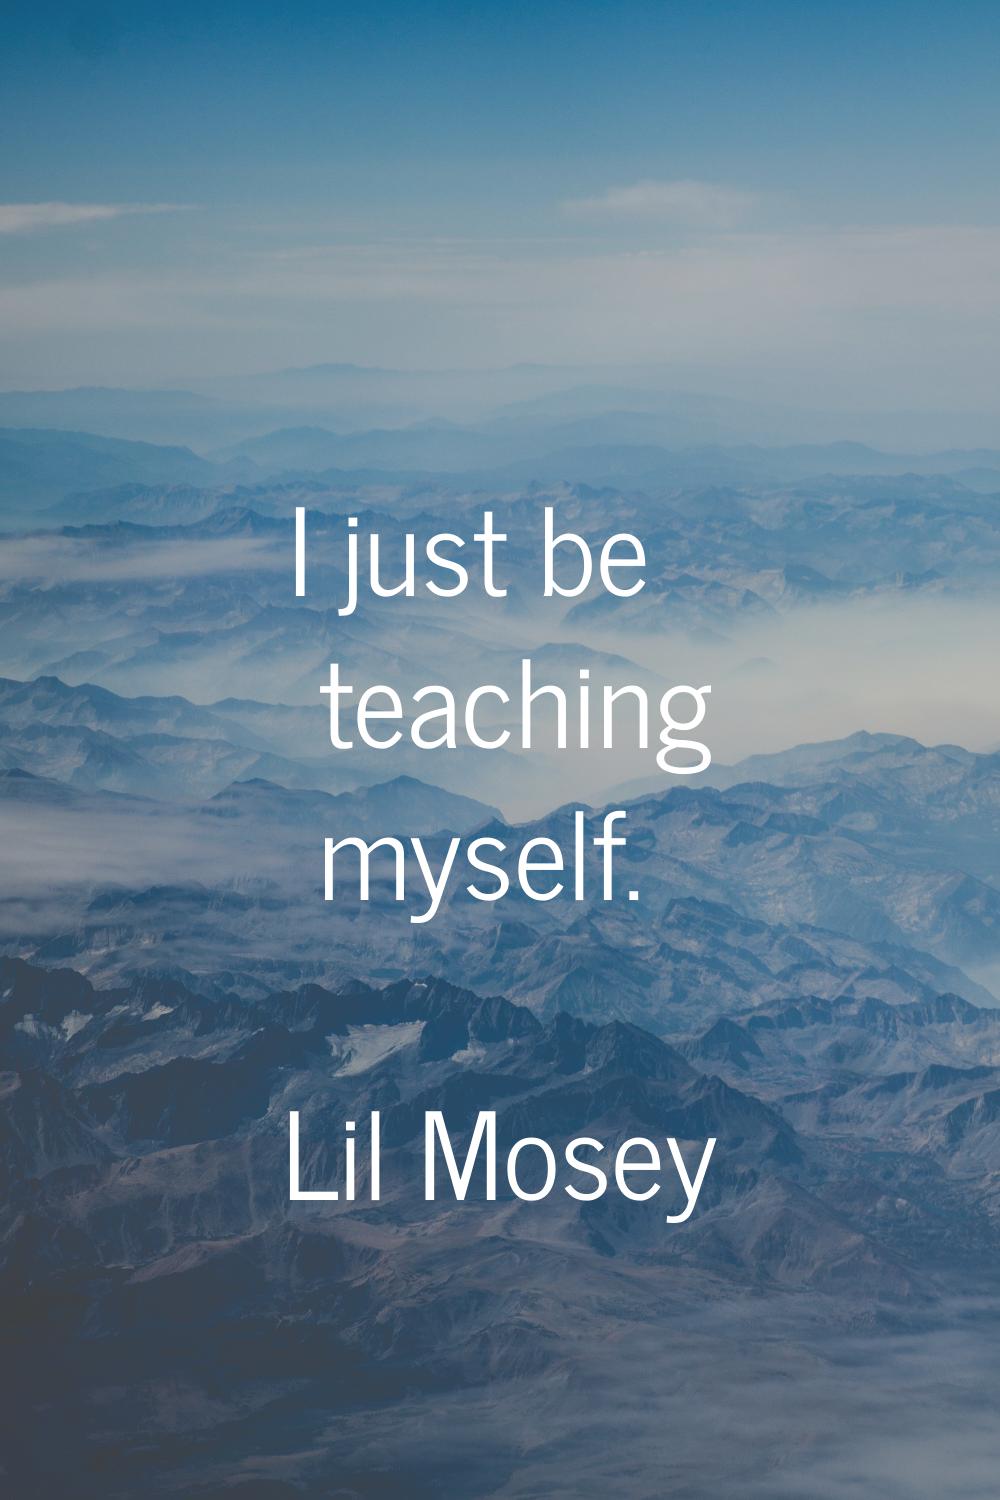 I just be teaching myself.